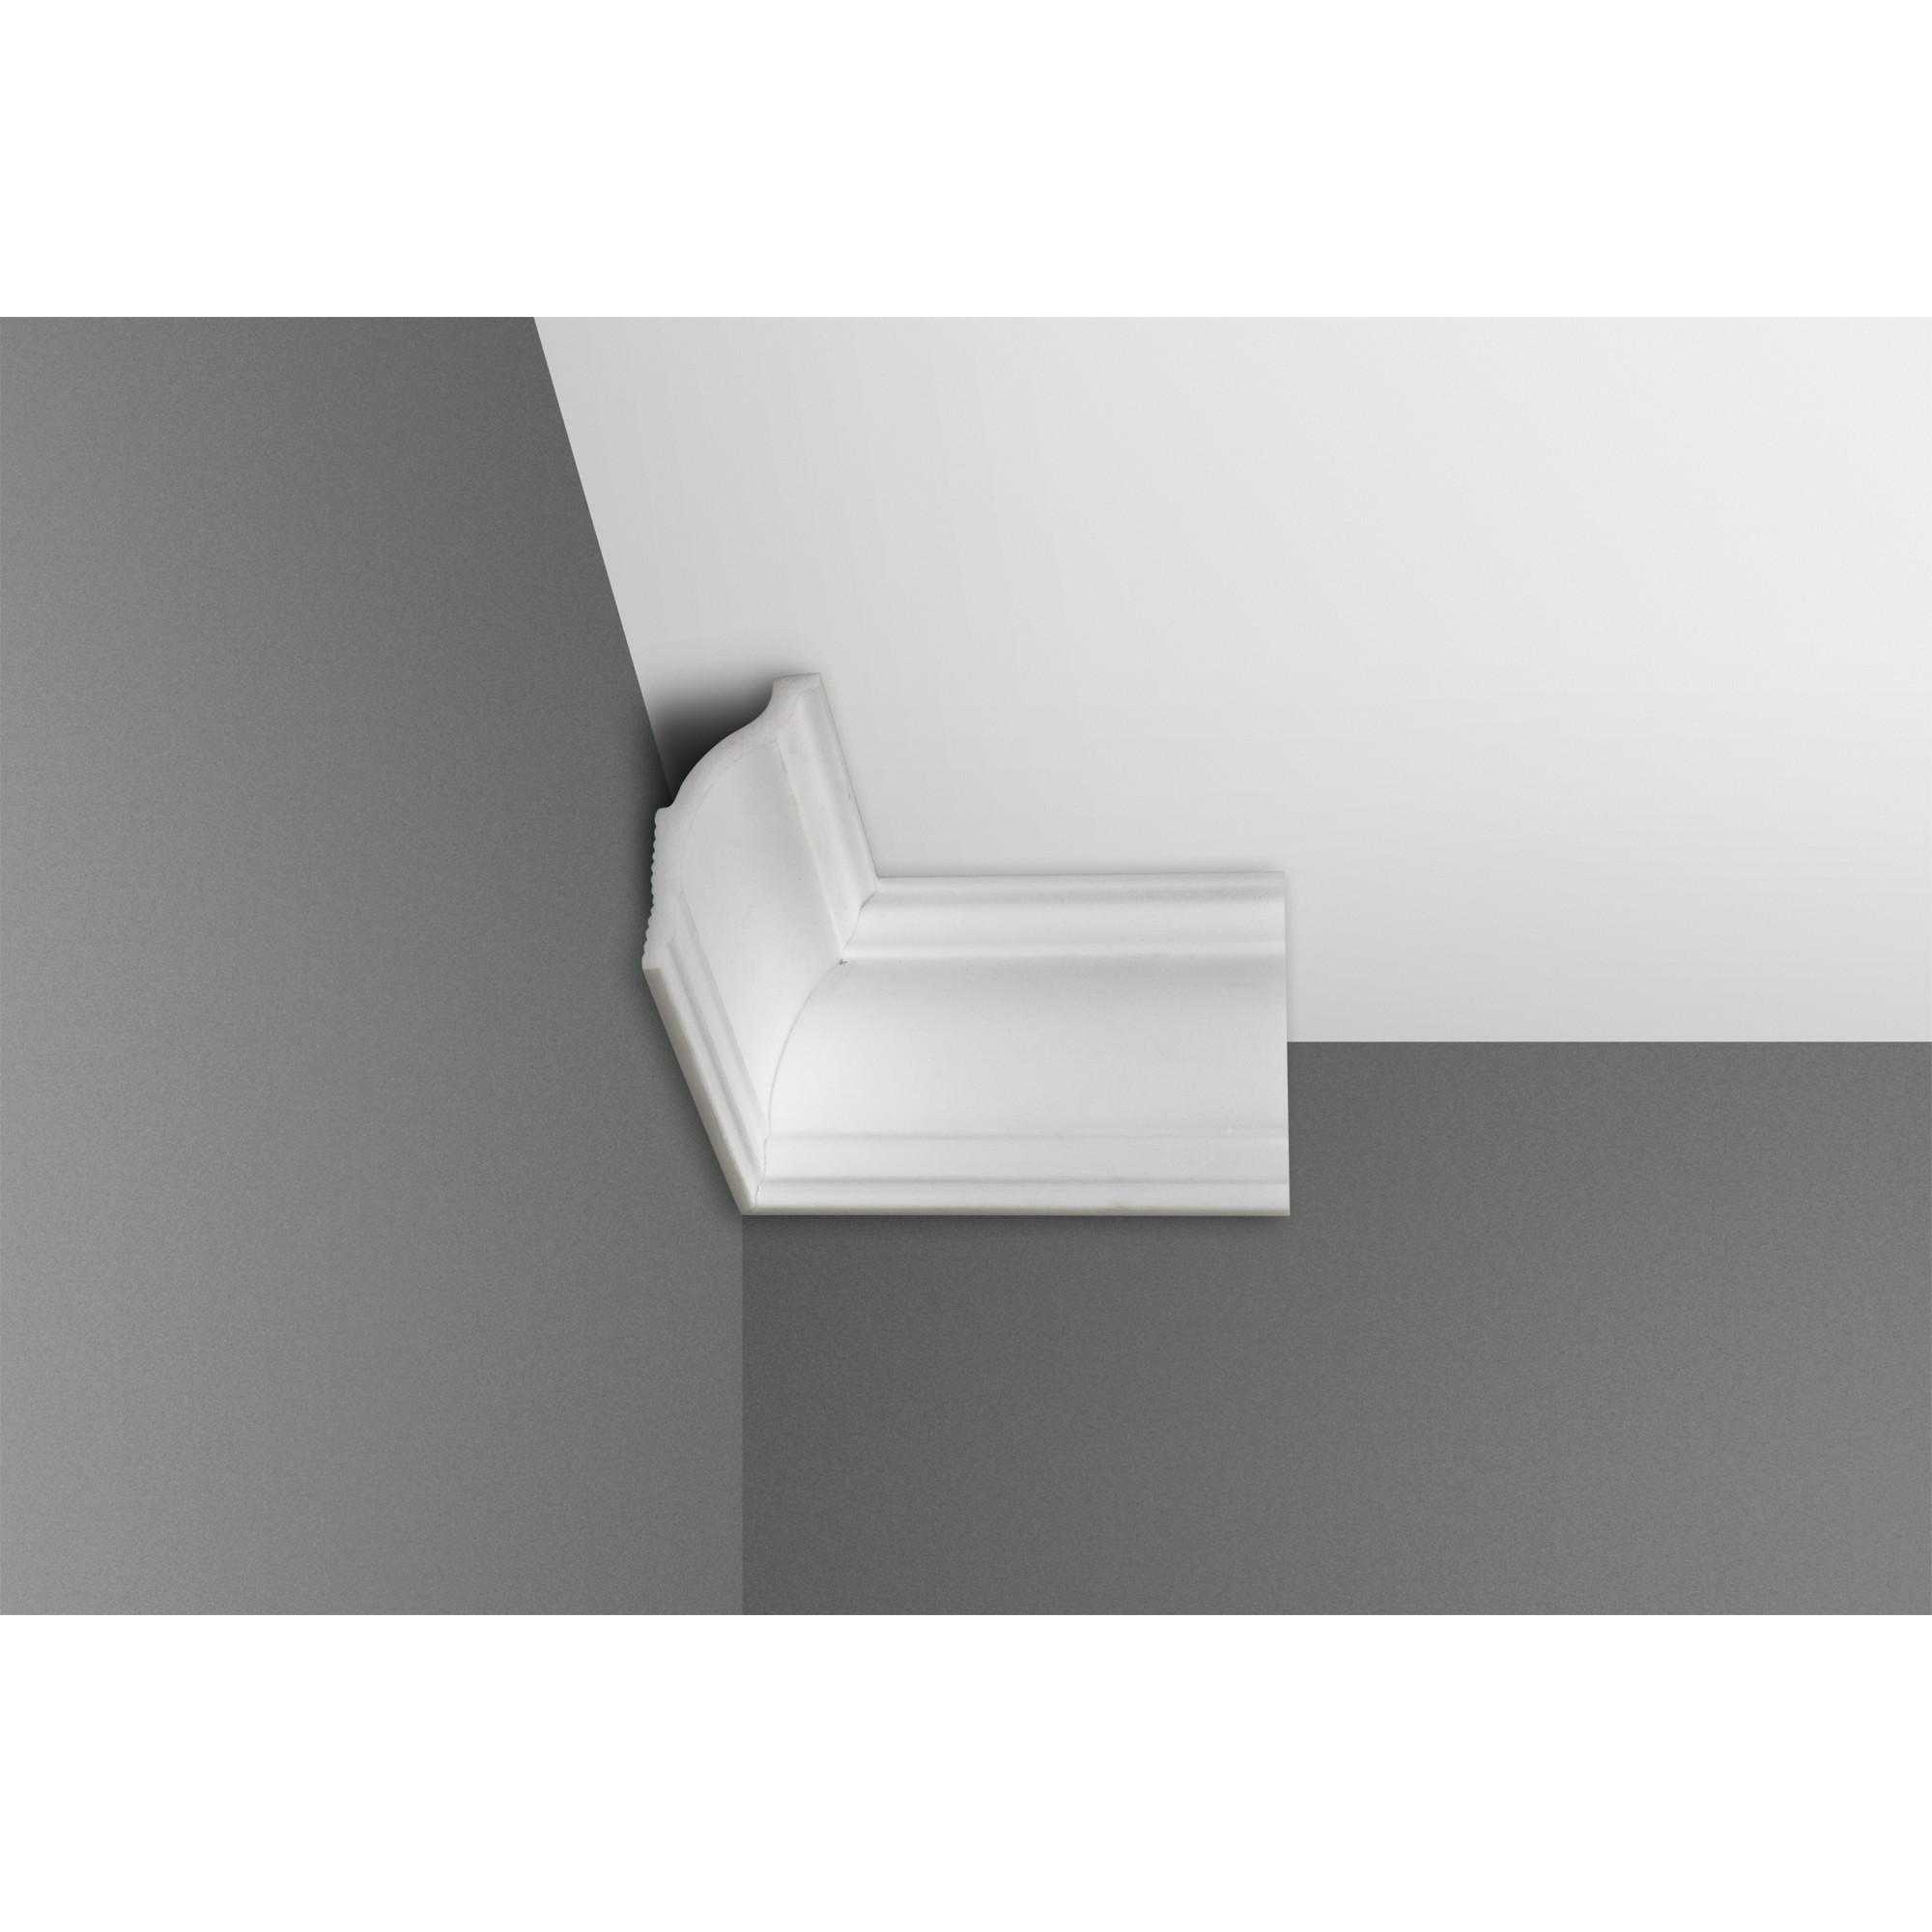 Уголок для потолочного плинтуса полистирол format 5007 белый 30-50 мм 4 шт.